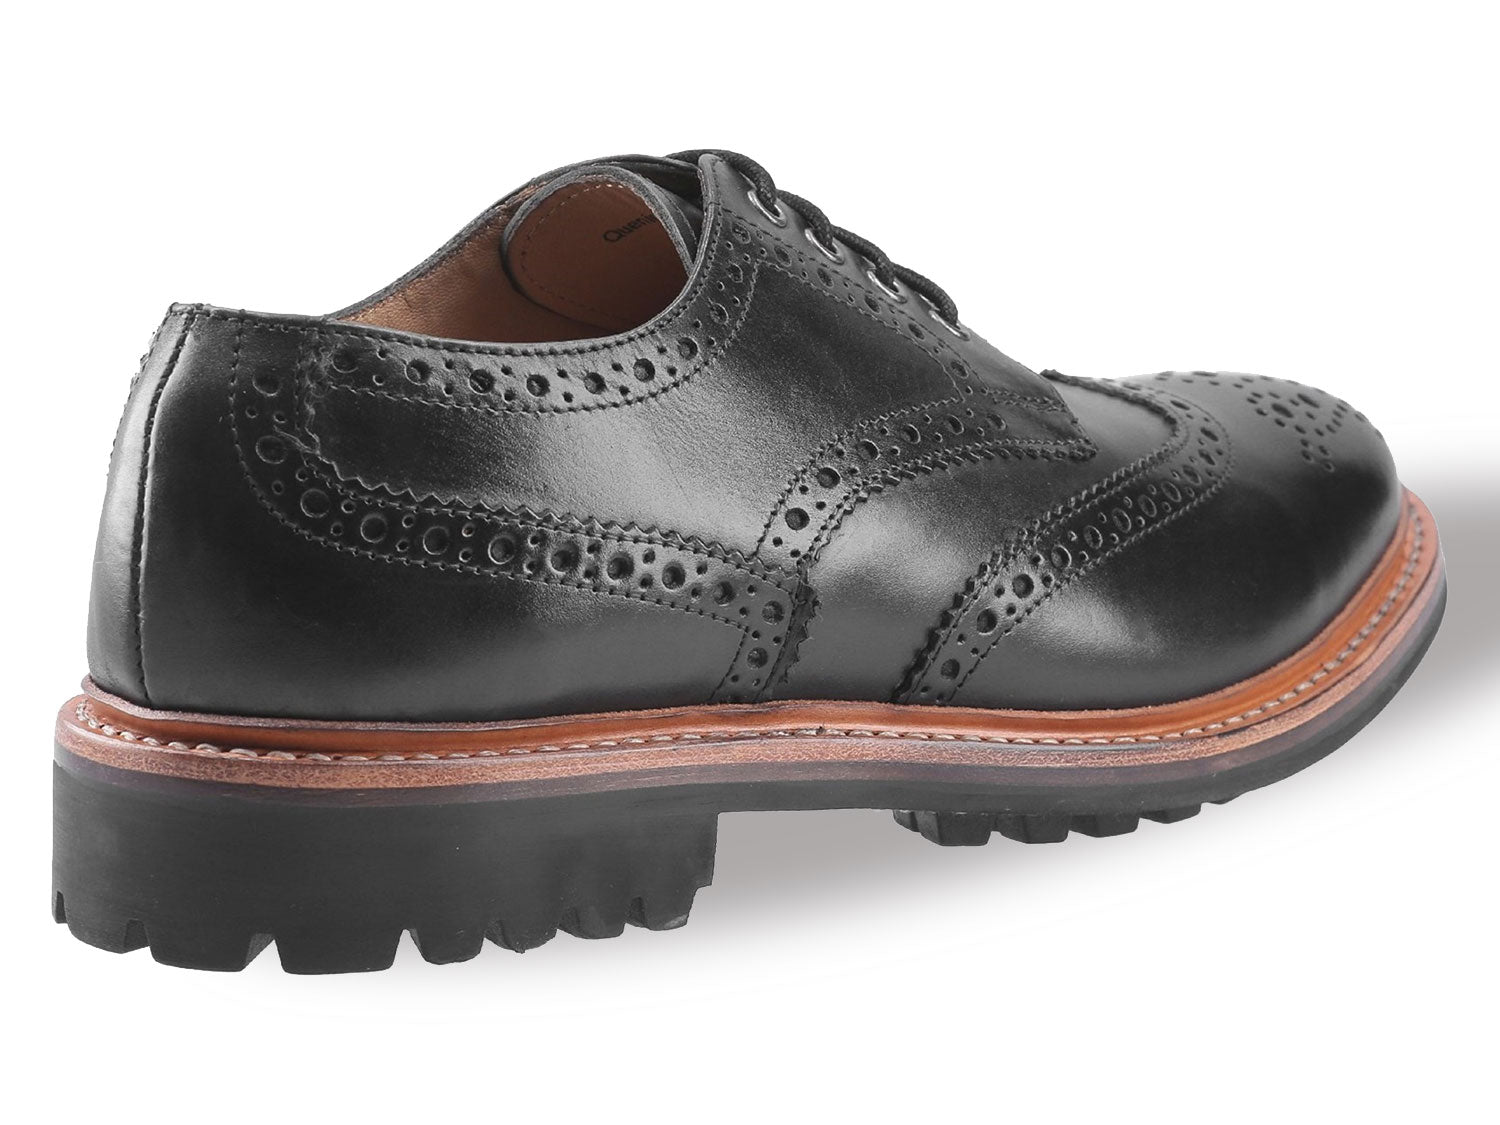 Black Wing tip brogue shoe with commando sole 